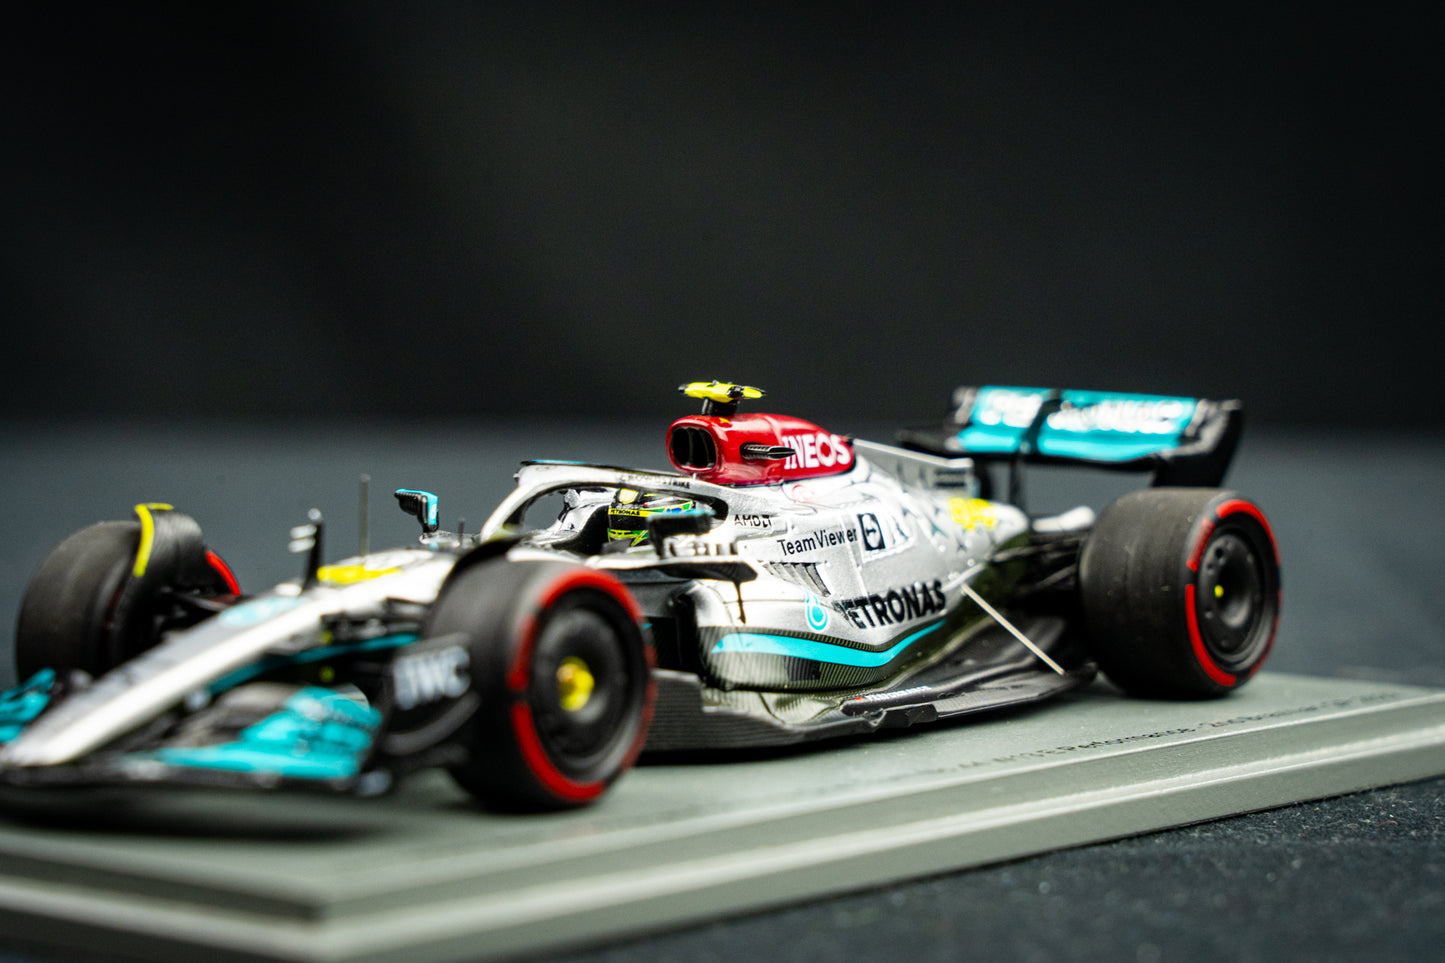 Lewis Hamilton Mercedes-AMG W13E #44 2nd Brazilian GP 2022 mit Pitboard, Spark 1:43